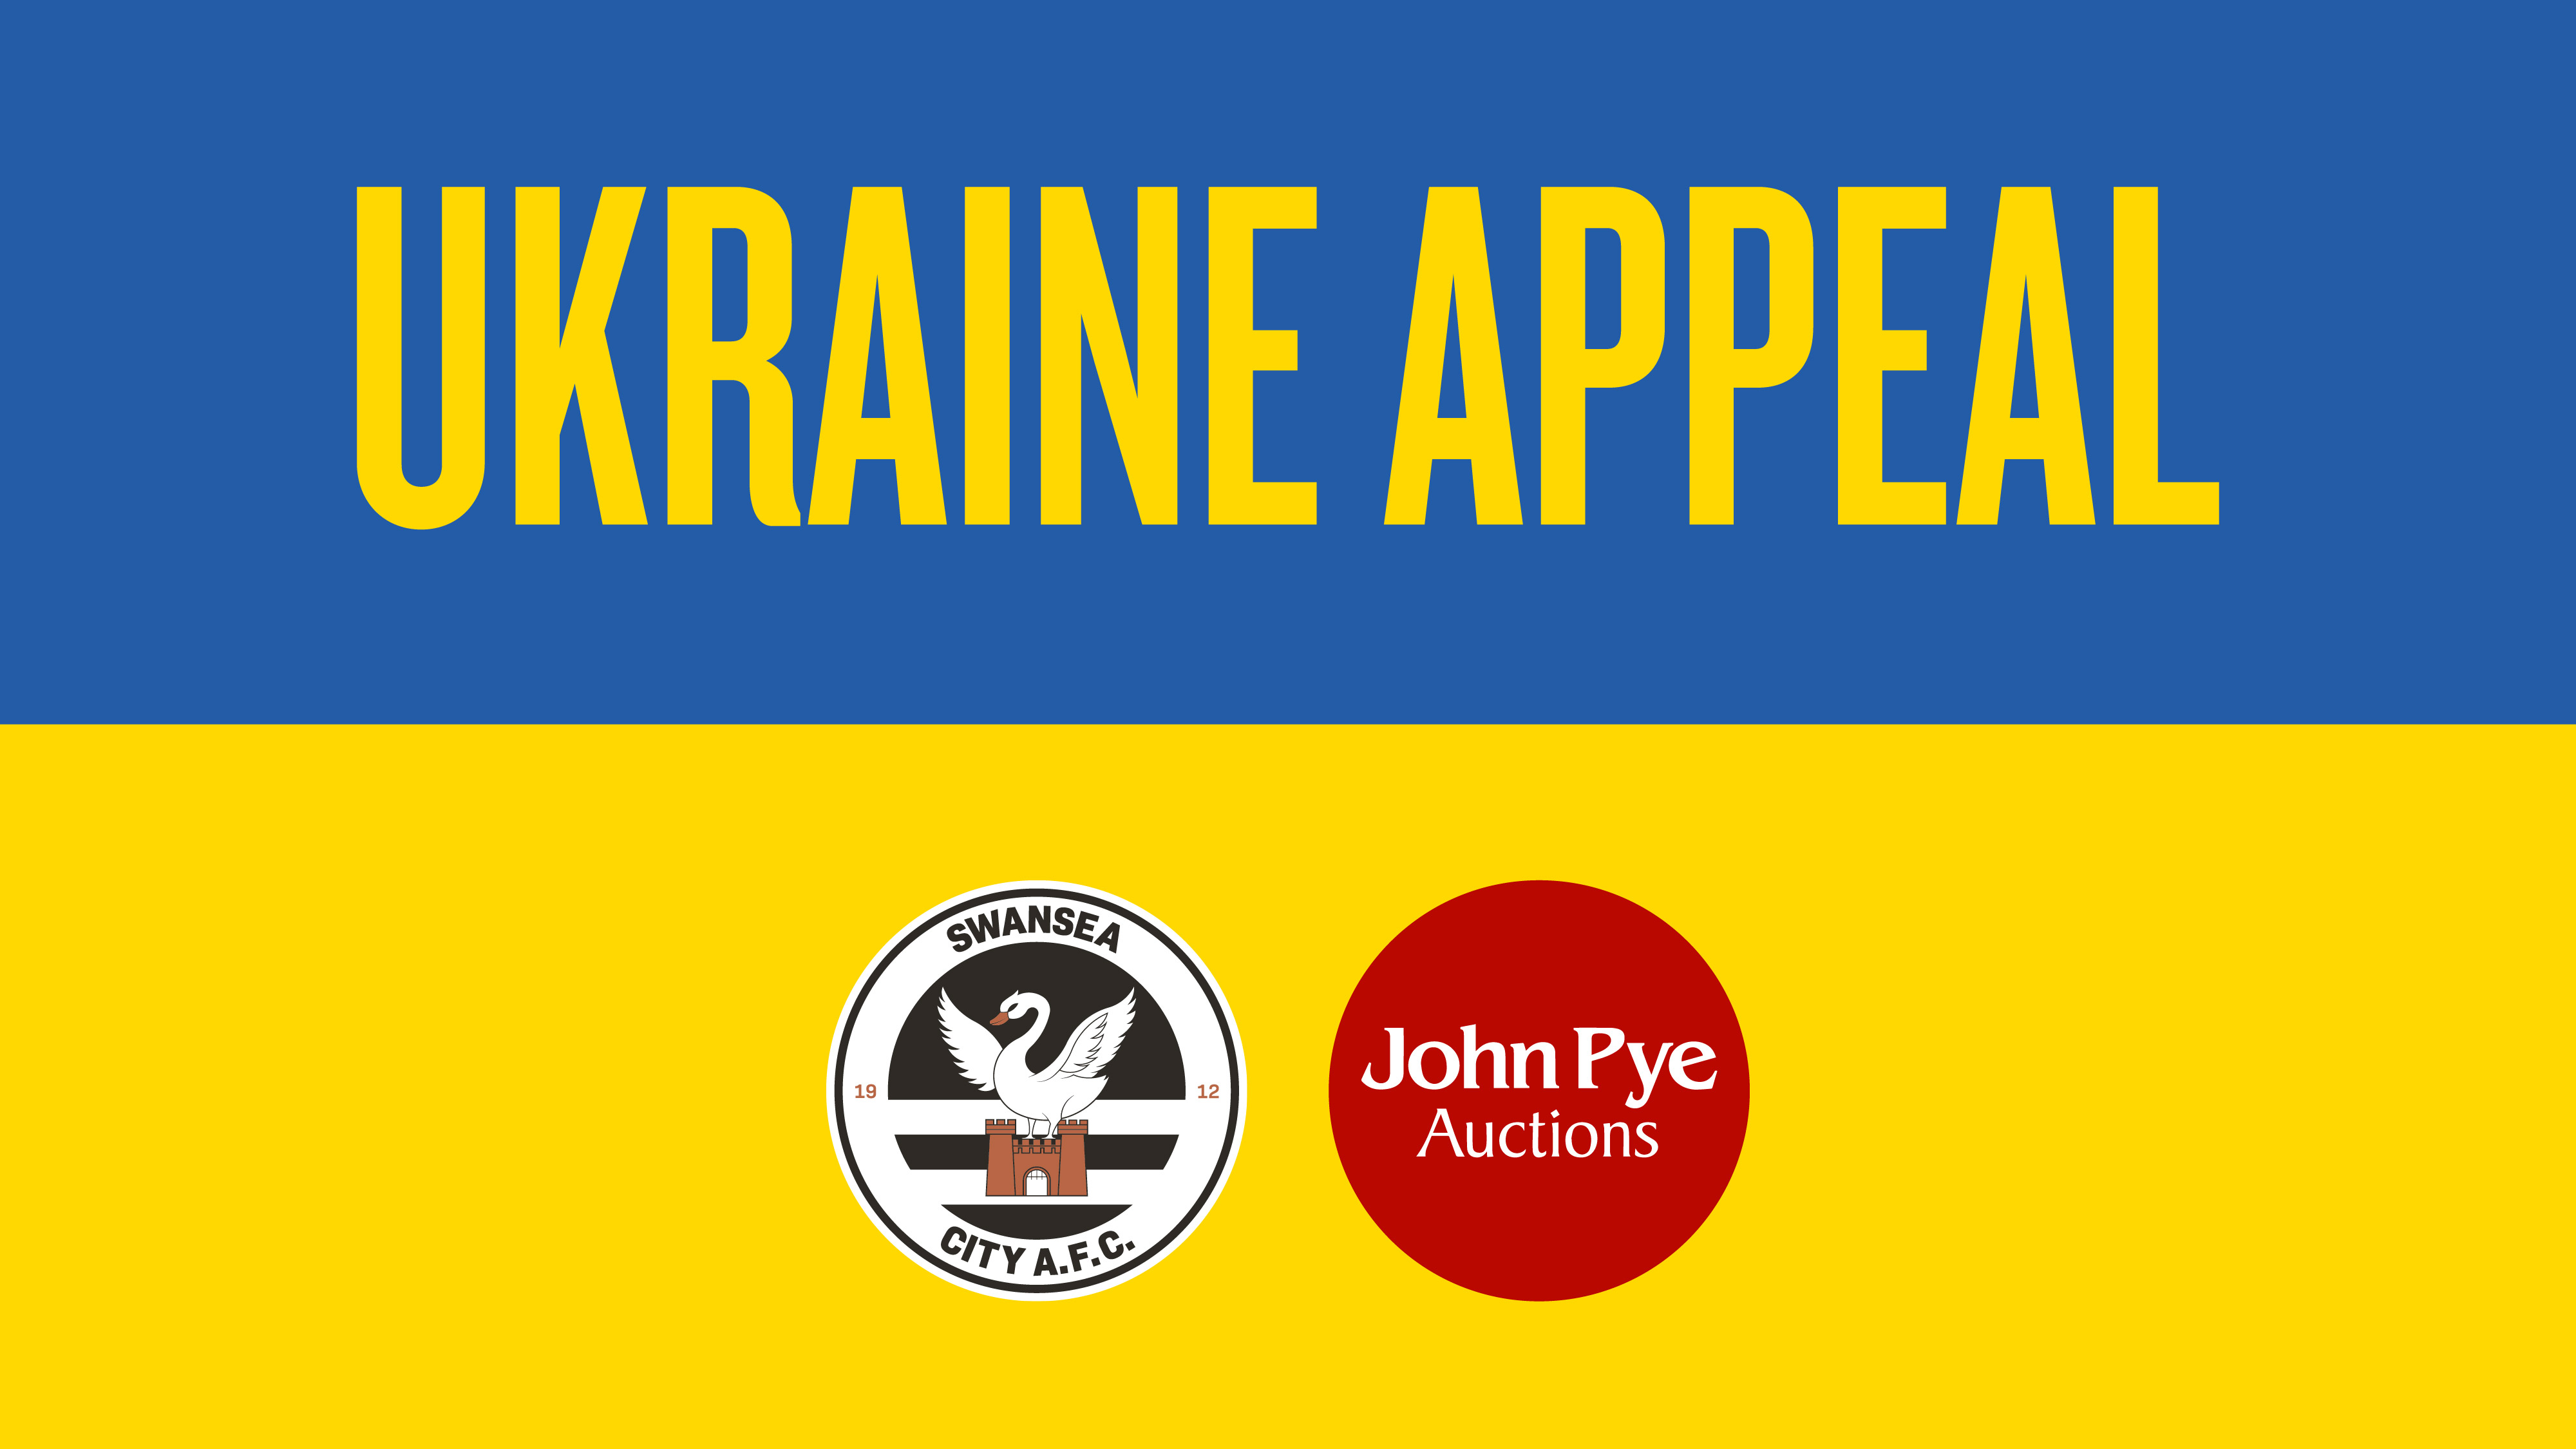 Ukraine appeal. Flag with Swans logo and John Pye logo on